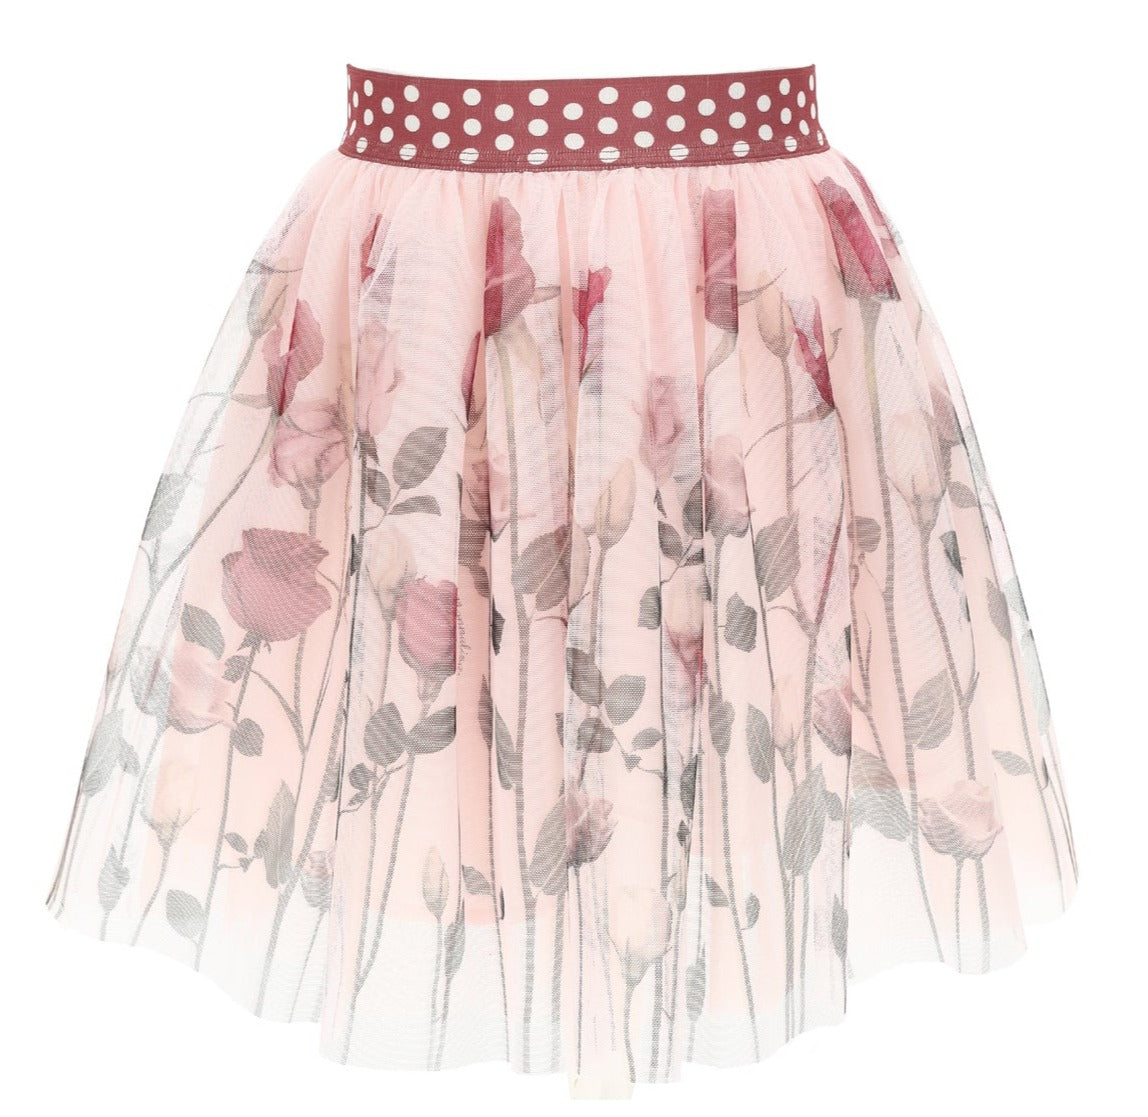 Monnalisa Floral Top & Skirt Outfit Set